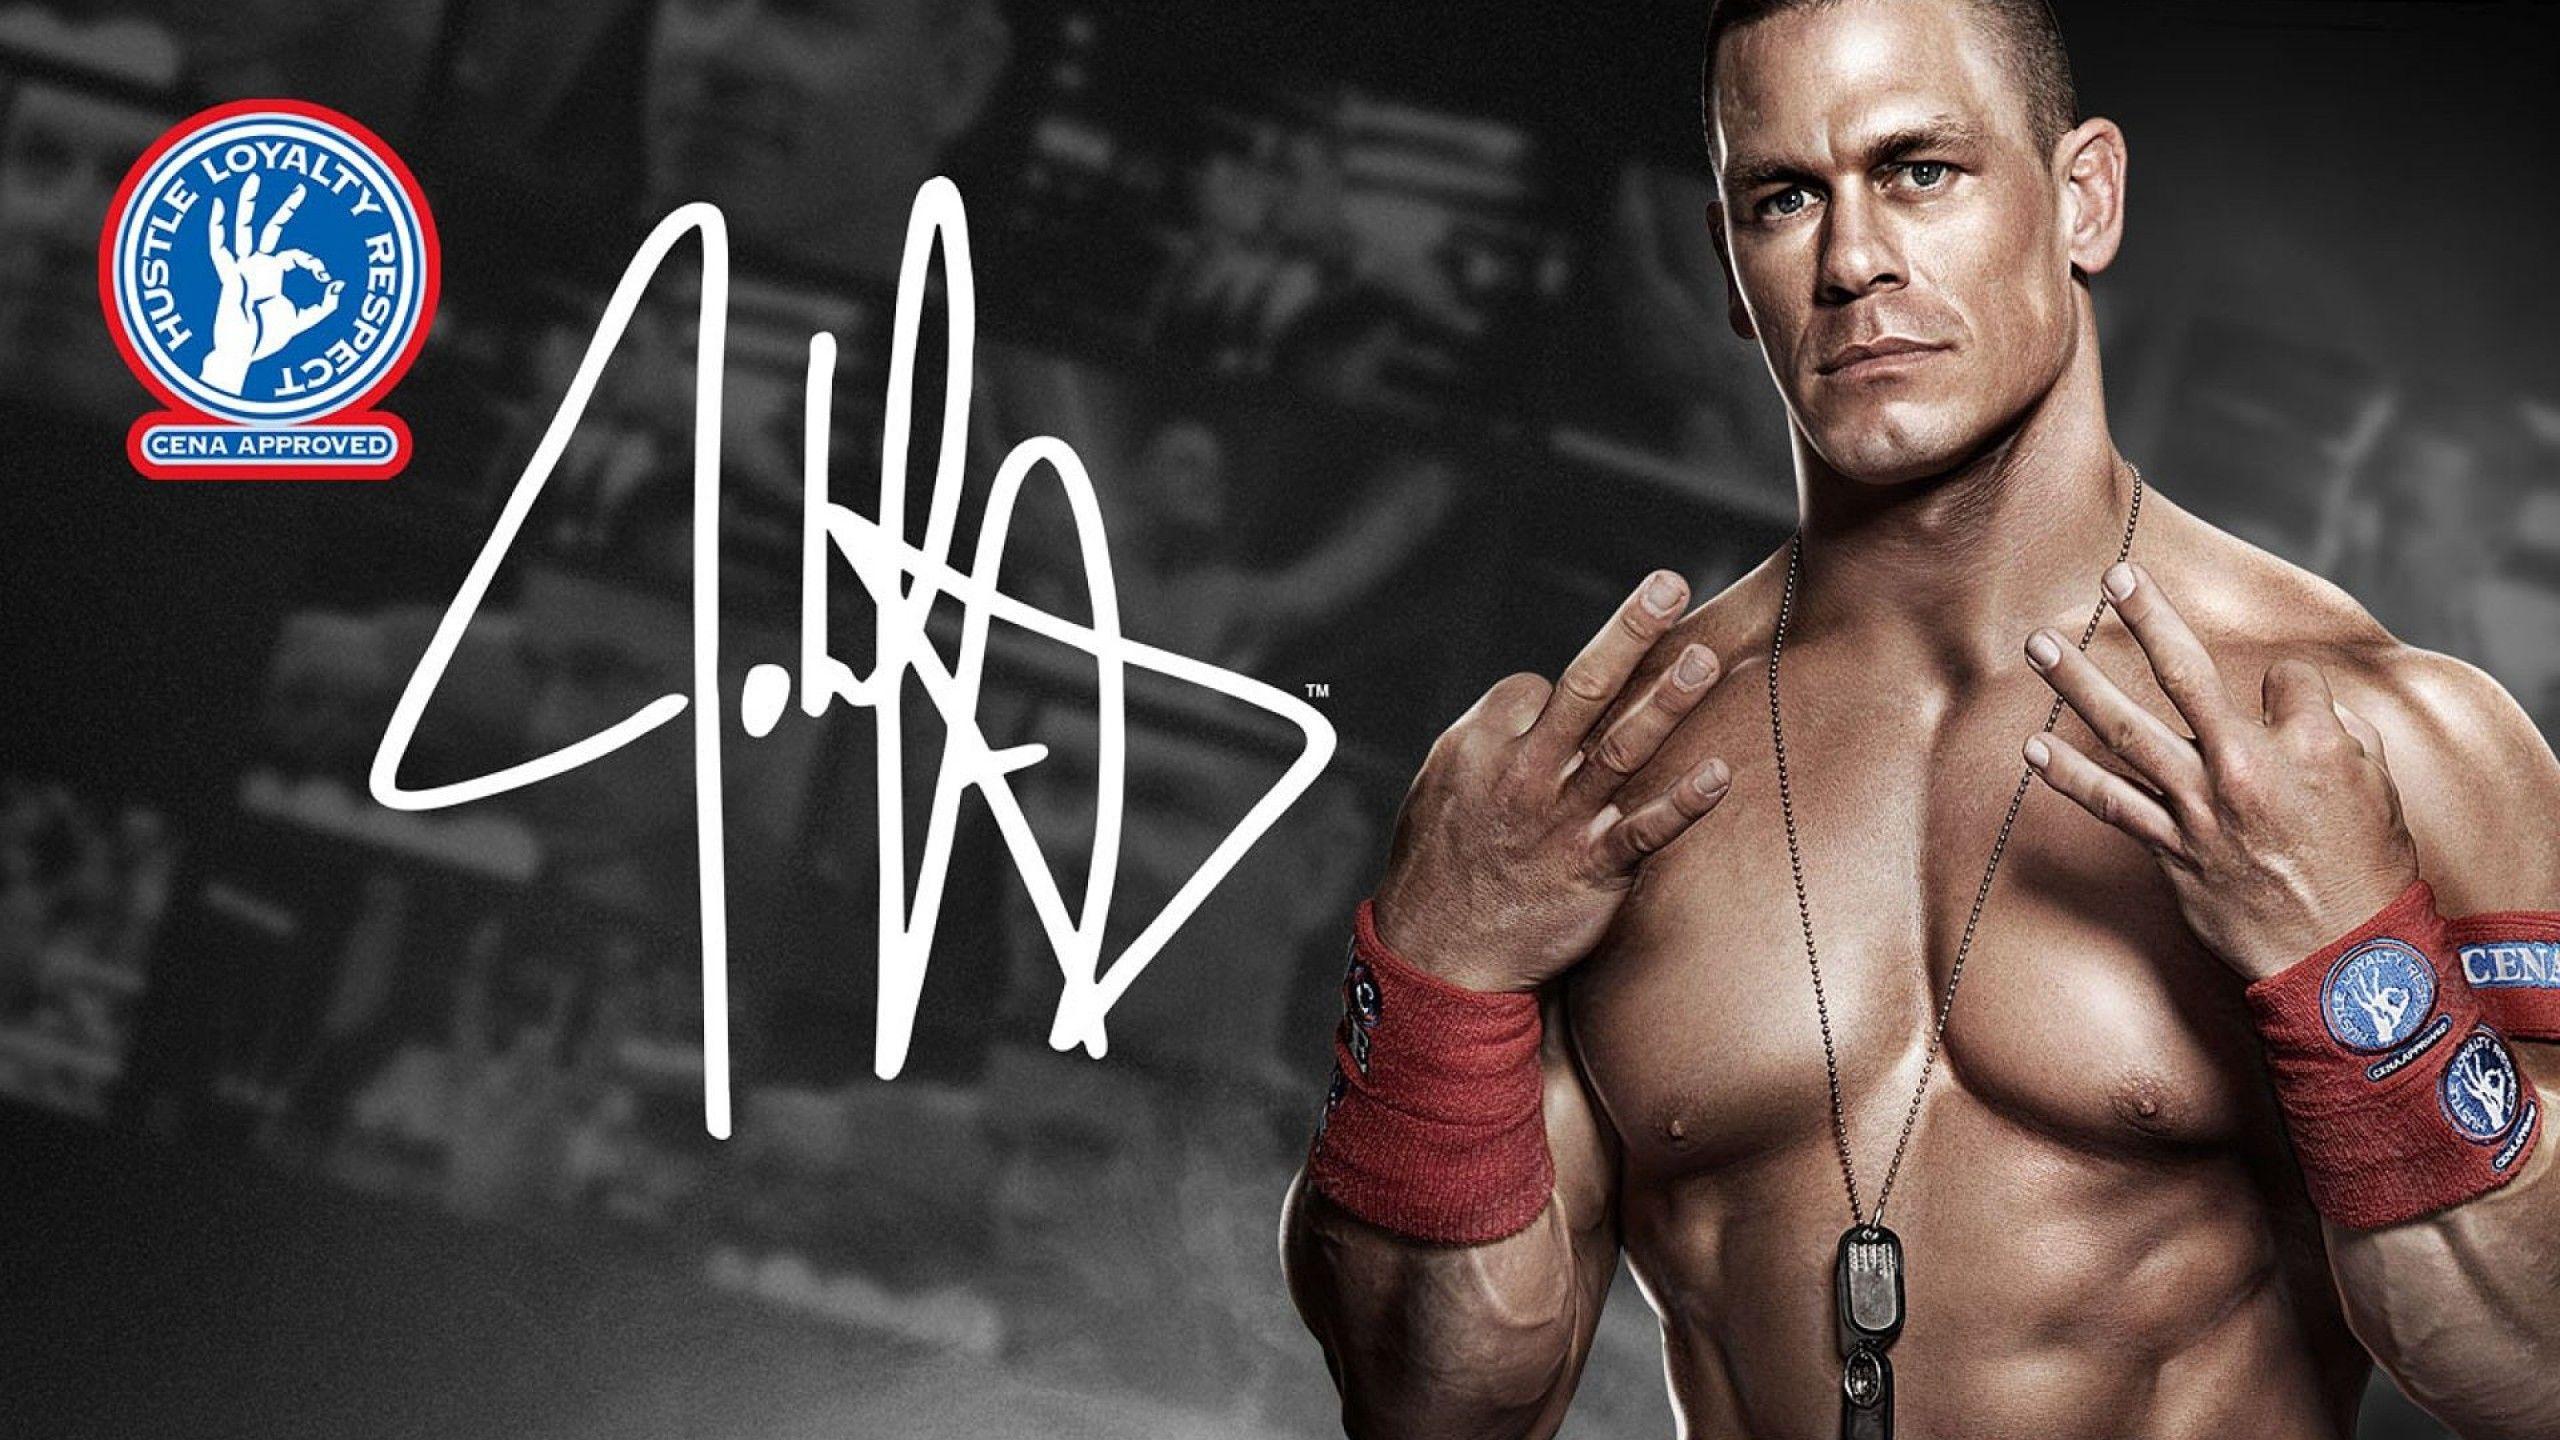 John Cena Full HD Wallpaper 2017 High Resolution Background Of